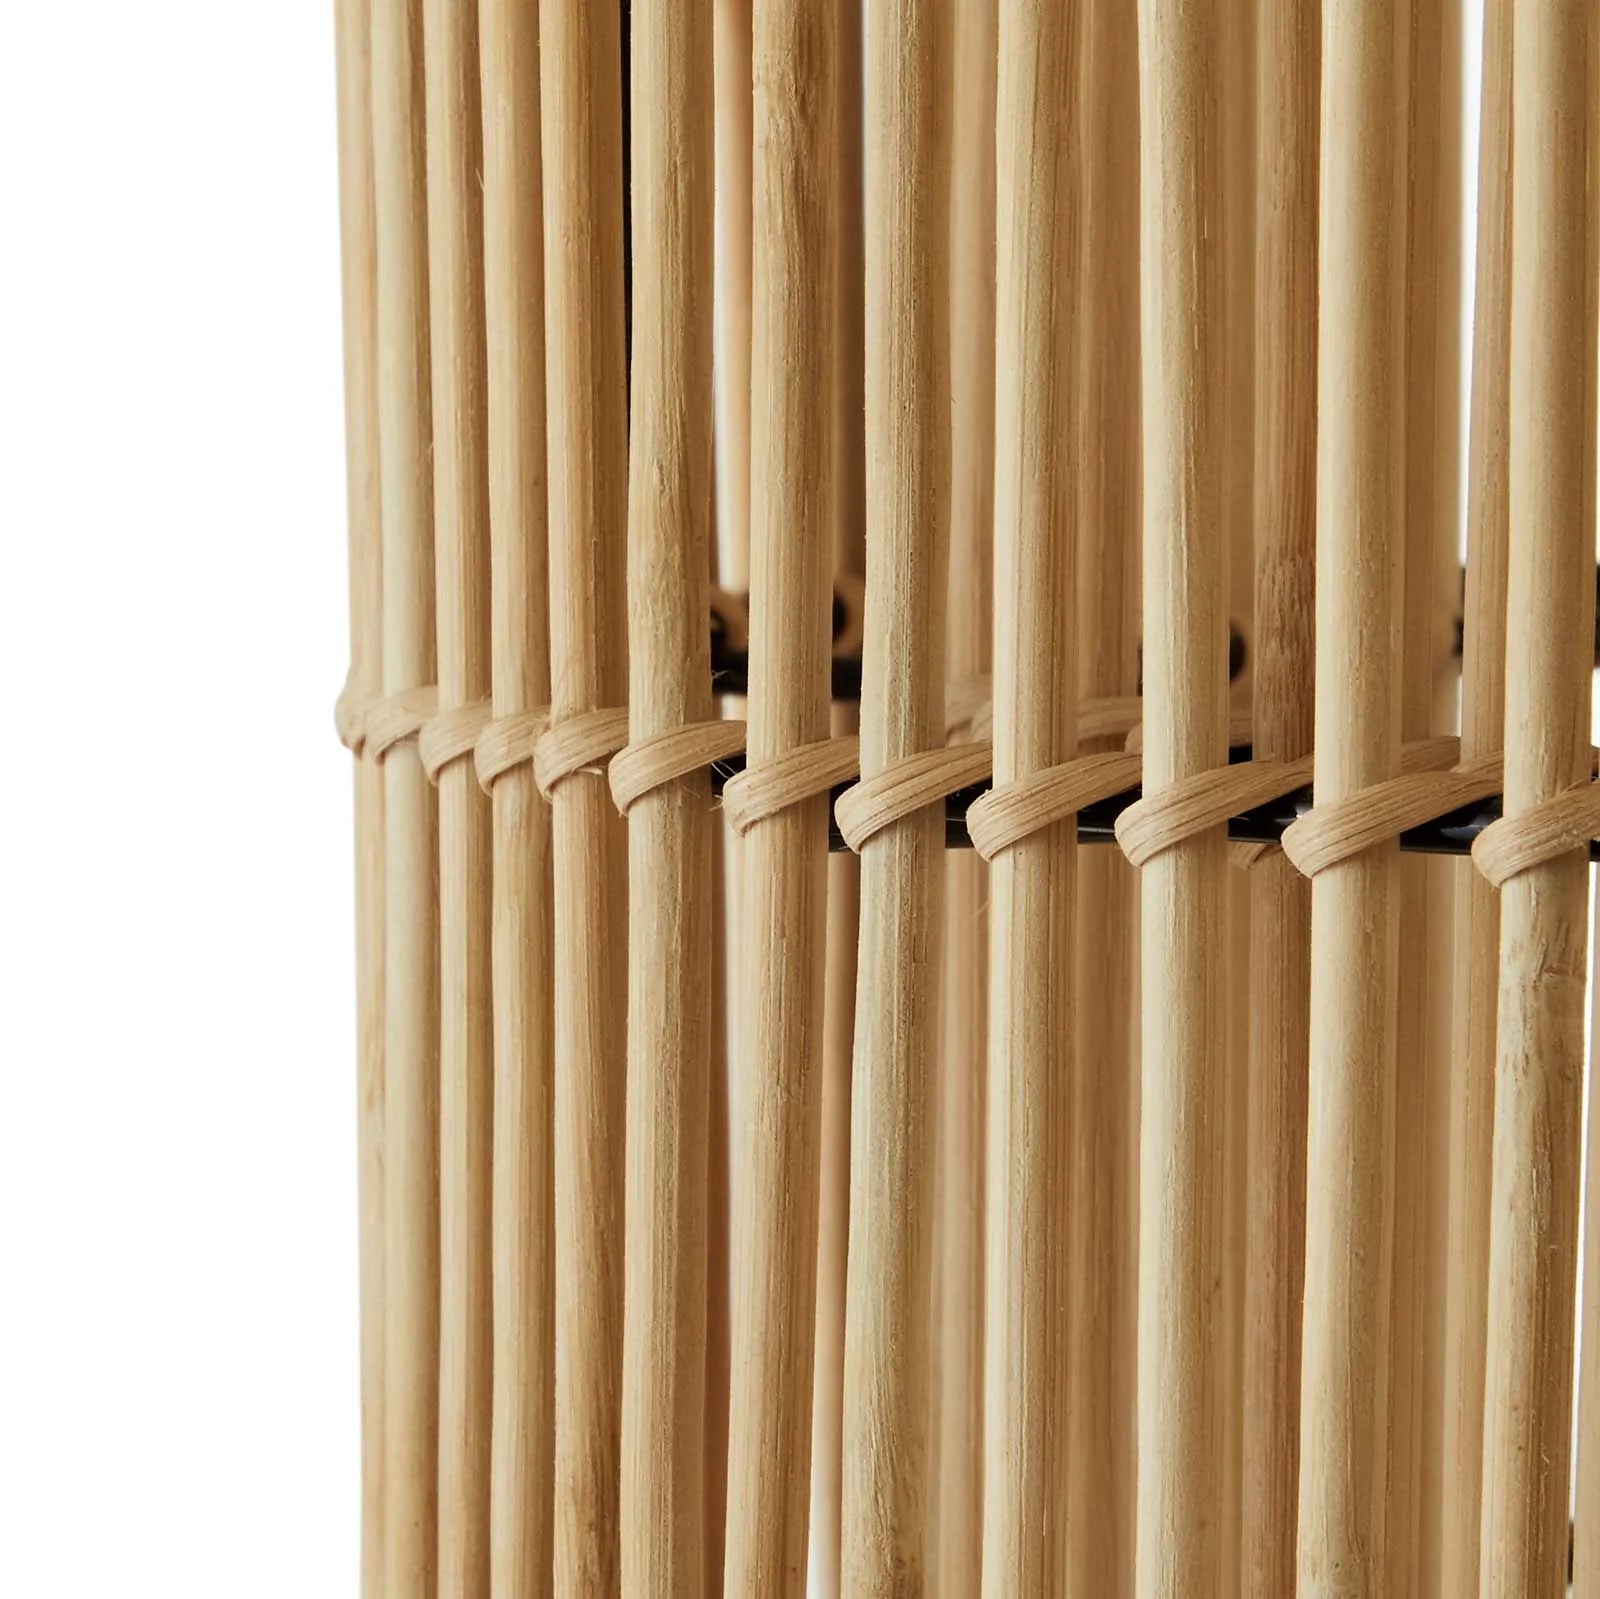 Nourish Bamboo Table Lamp